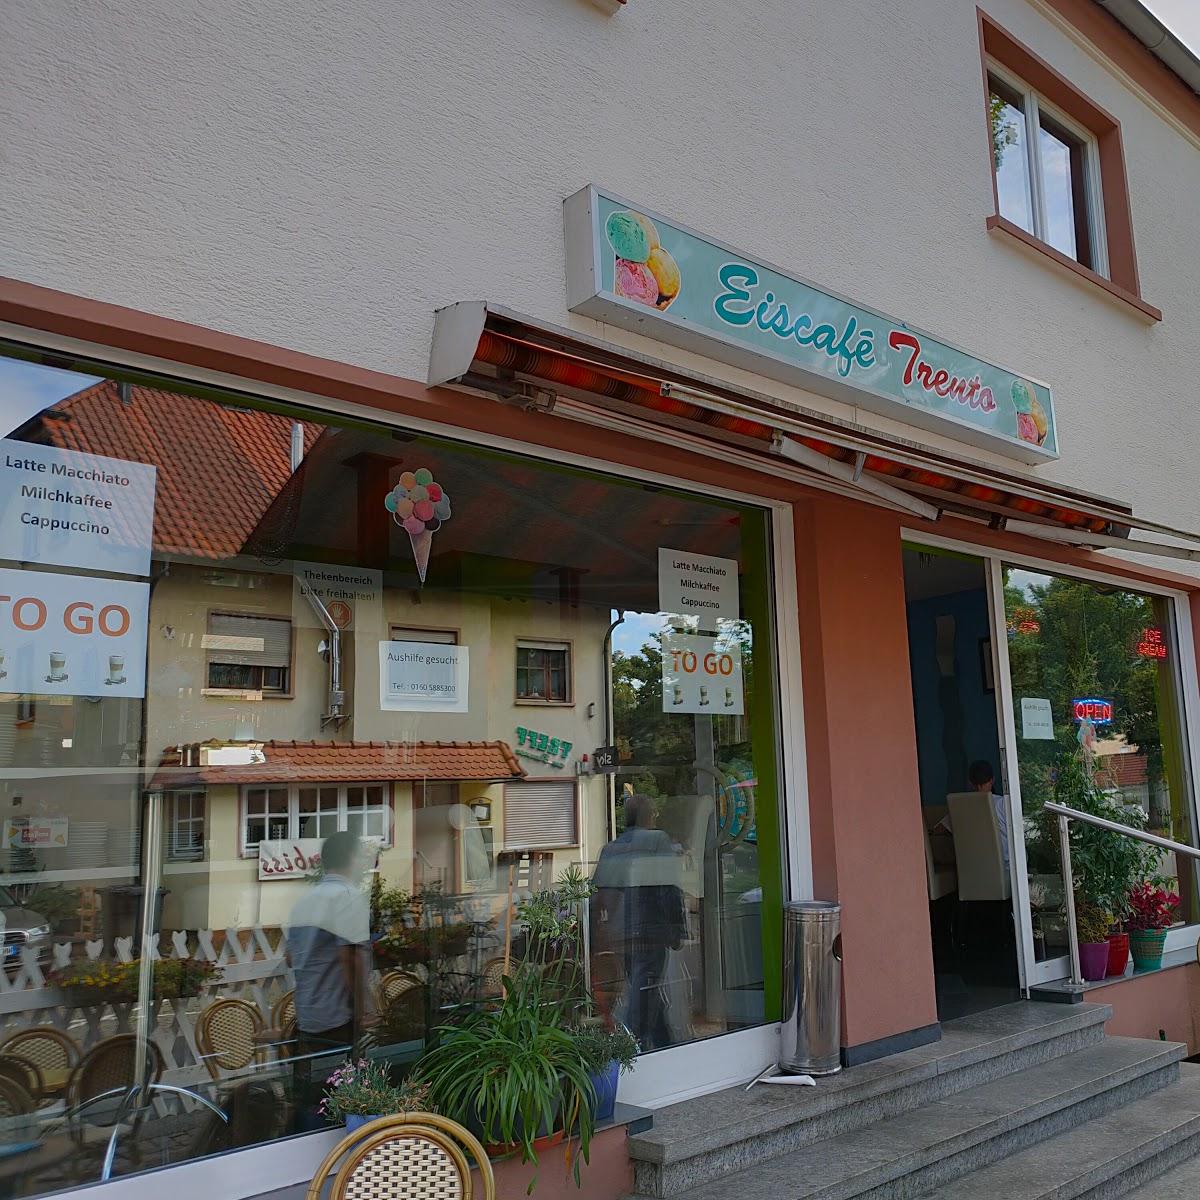 Restaurant "Eiscafe Trento" in Marpingen